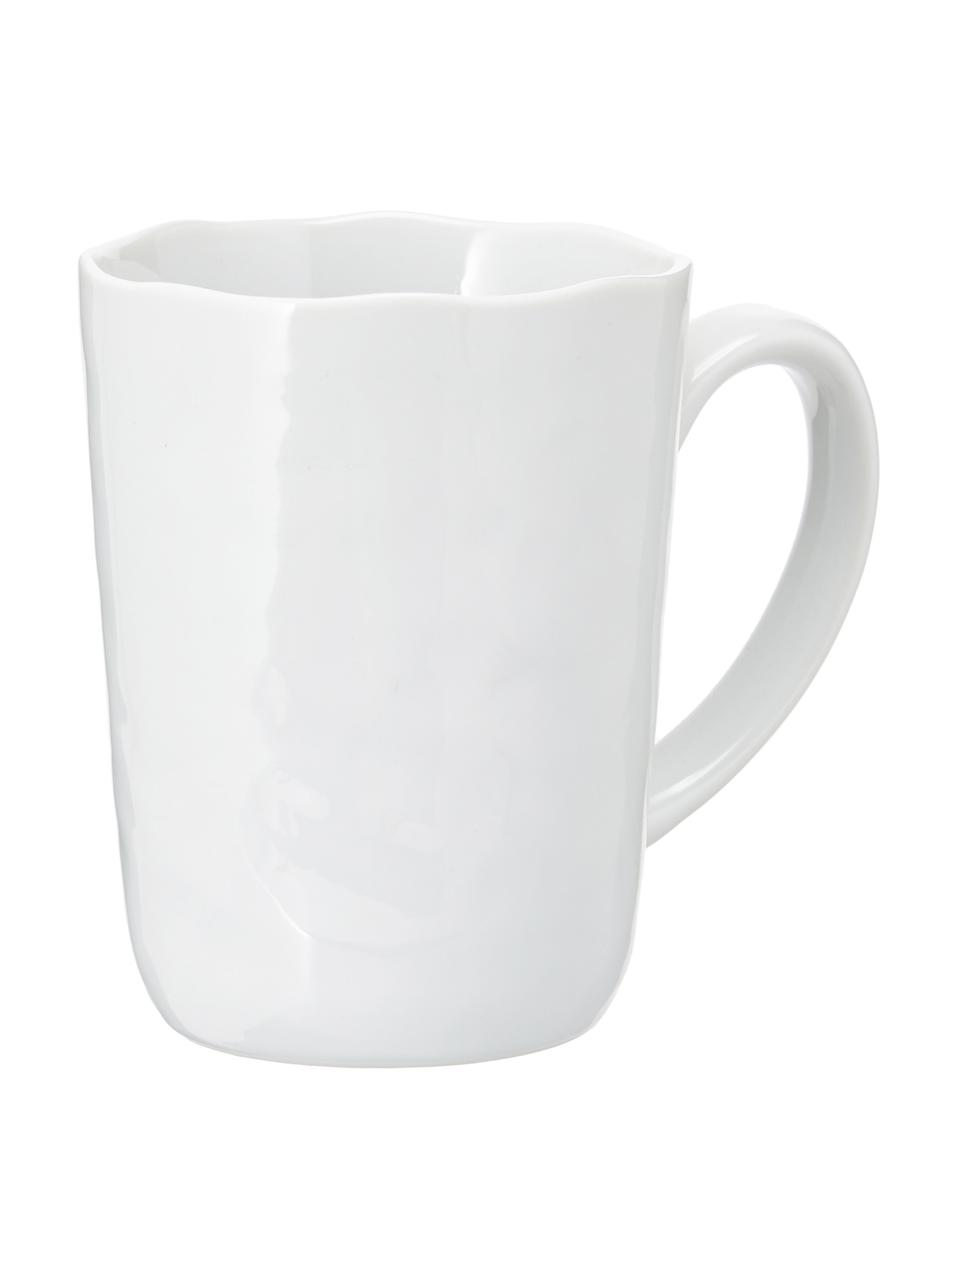 Tazza caffè con superficie irregolare Porcelino 6 pz, Porcellana, volutamente irregolare, Bianco, Ø 8 x Alt. 11 cm, 550 ml